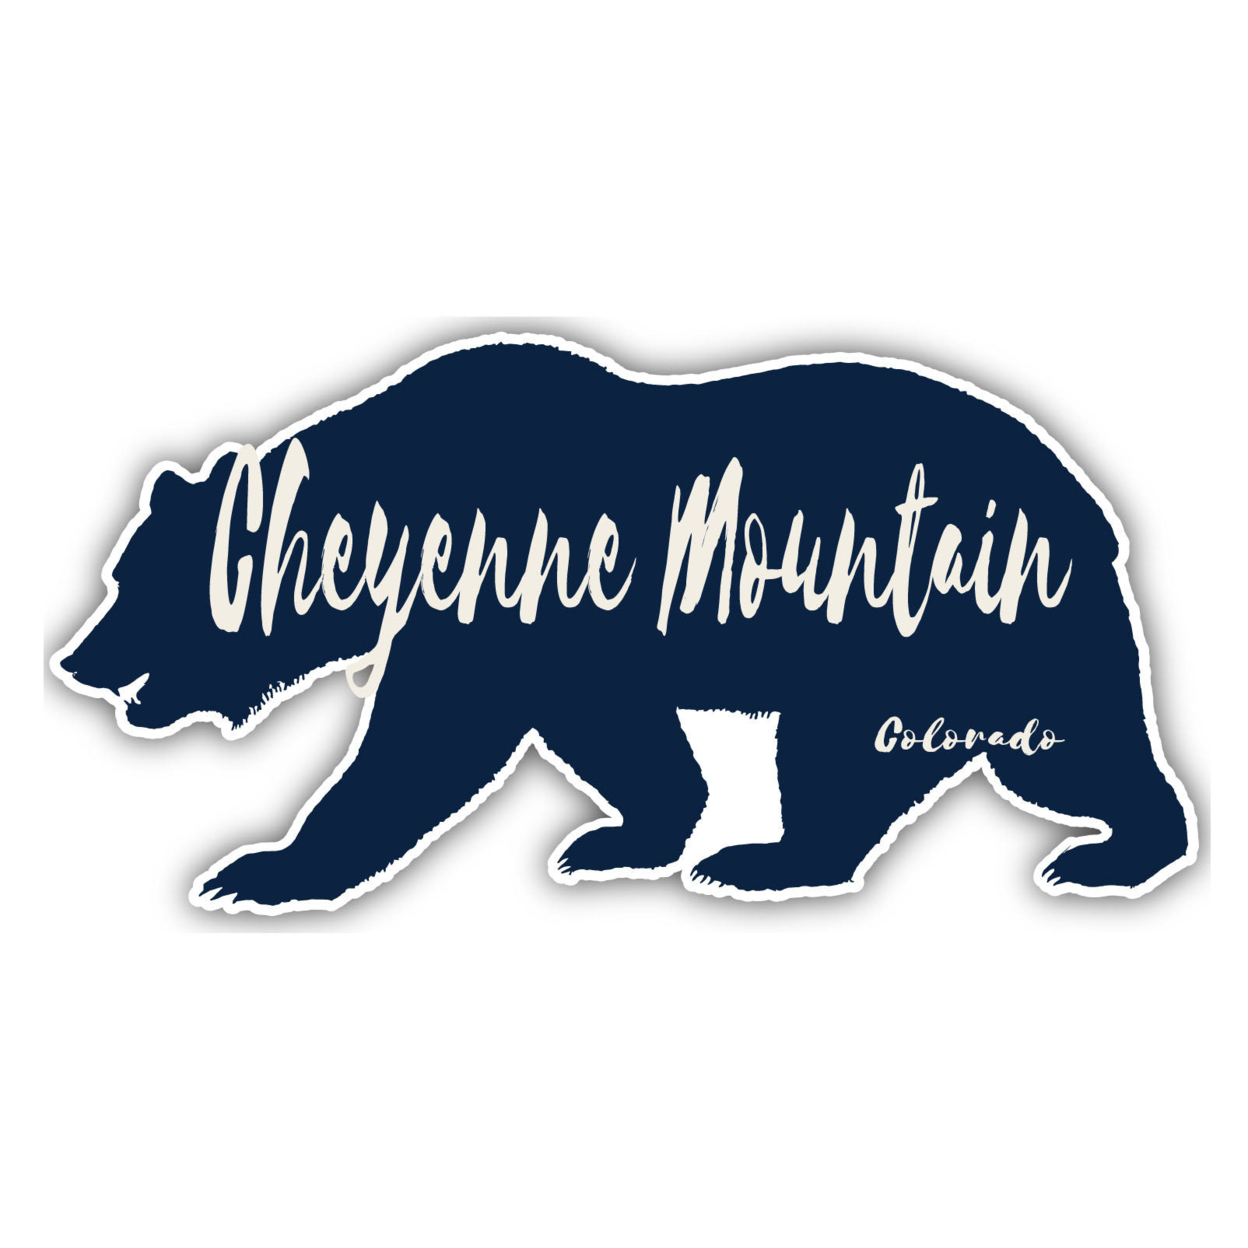 Cheyenne Mountain Colorado Souvenir Decorative Stickers (Choose Theme And Size) - Single Unit, 2-Inch, Tent